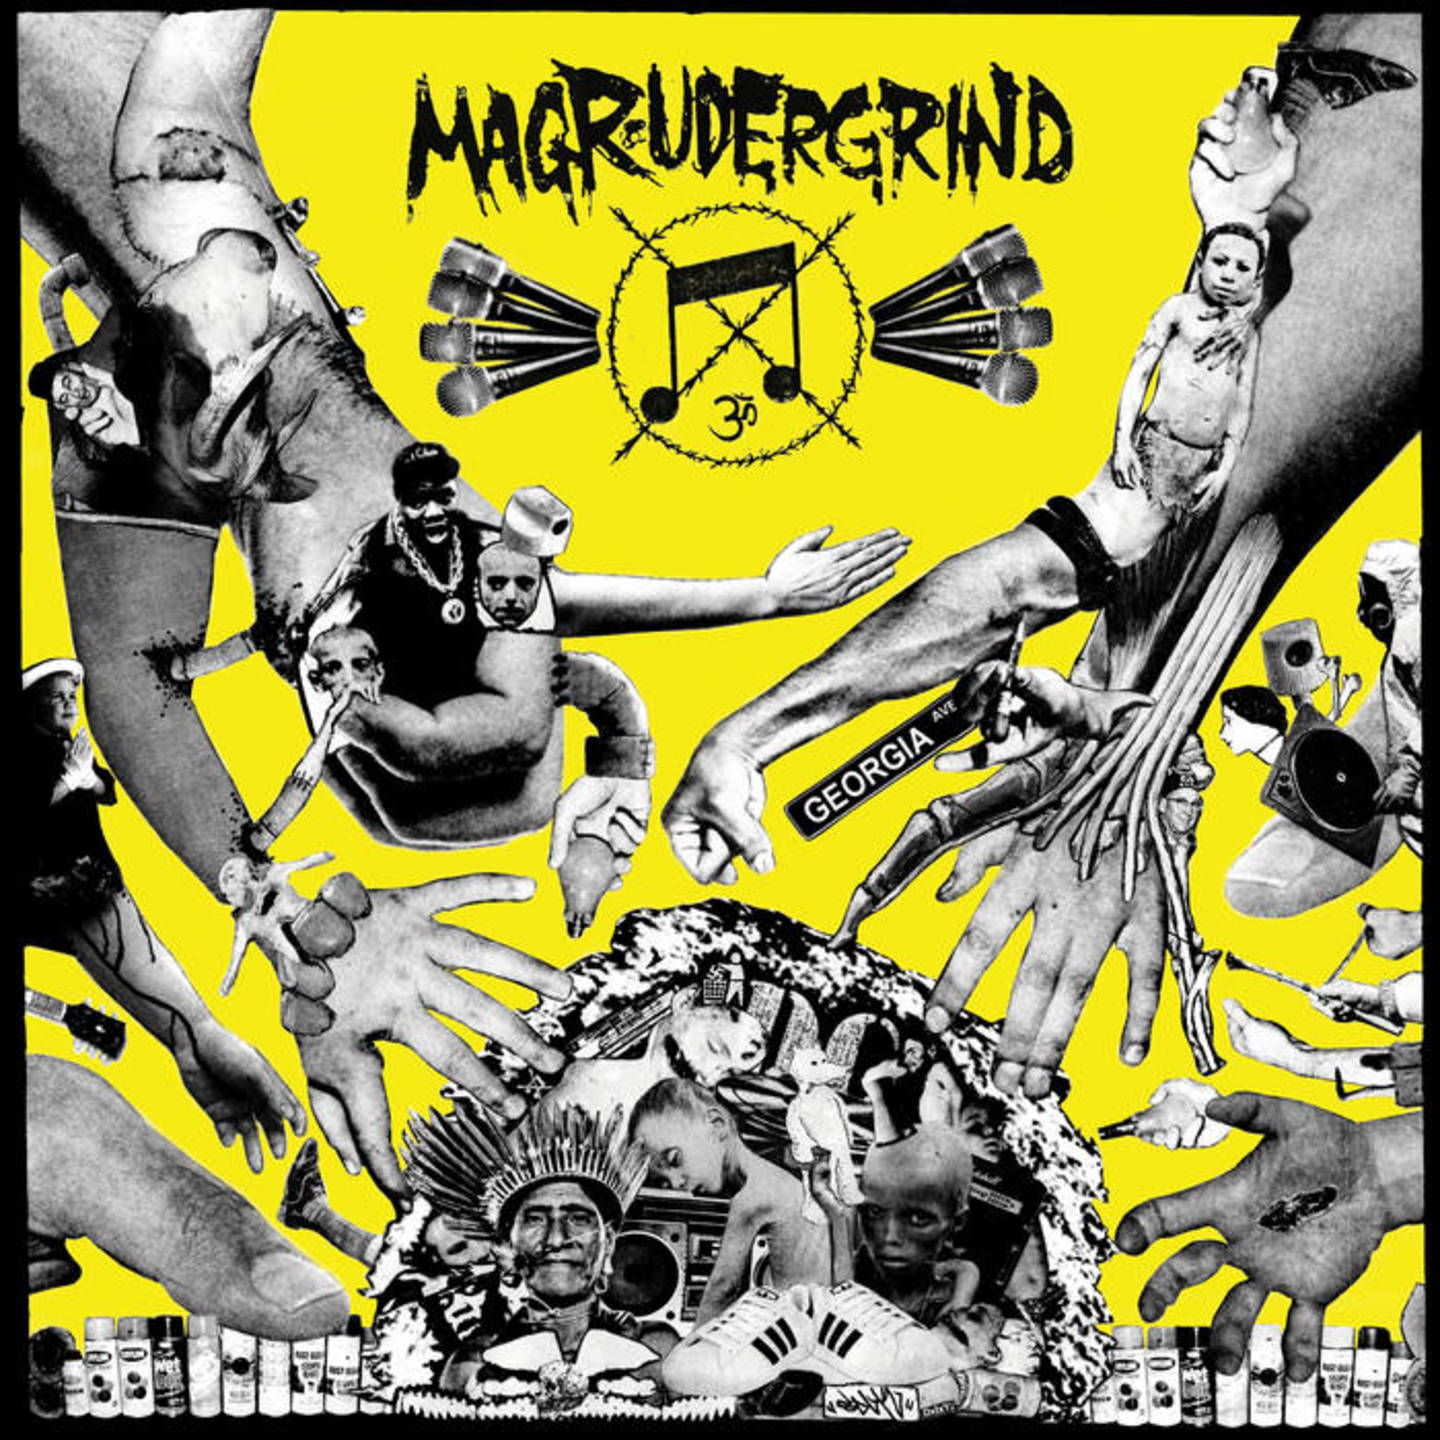 MAGRUDERGRIND - Magrudergrind LP